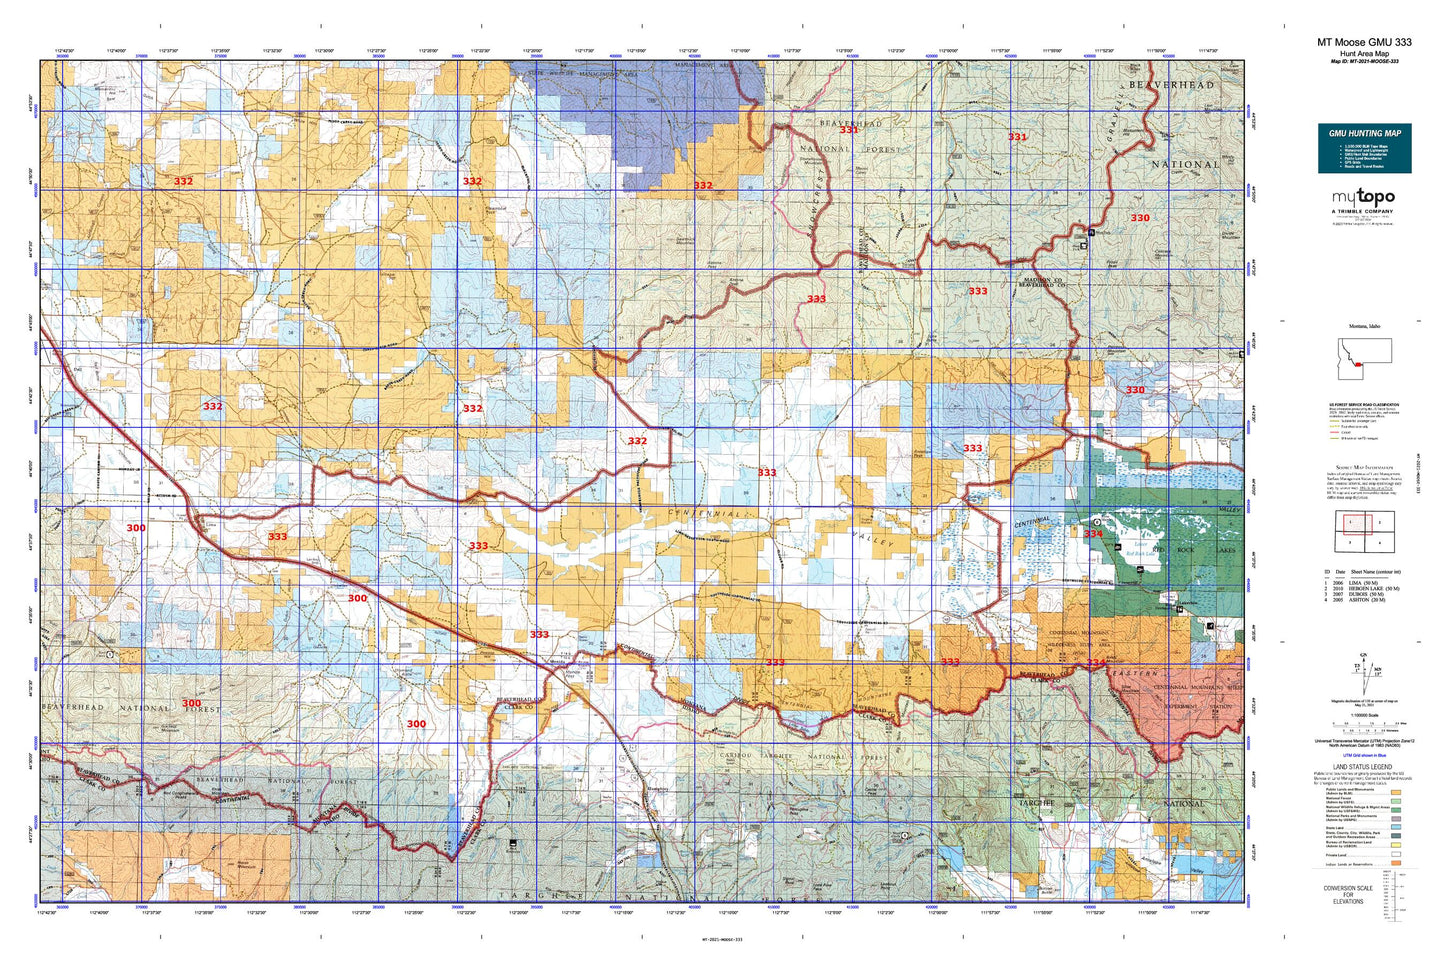 Montana Moose GMU 333 Map Image